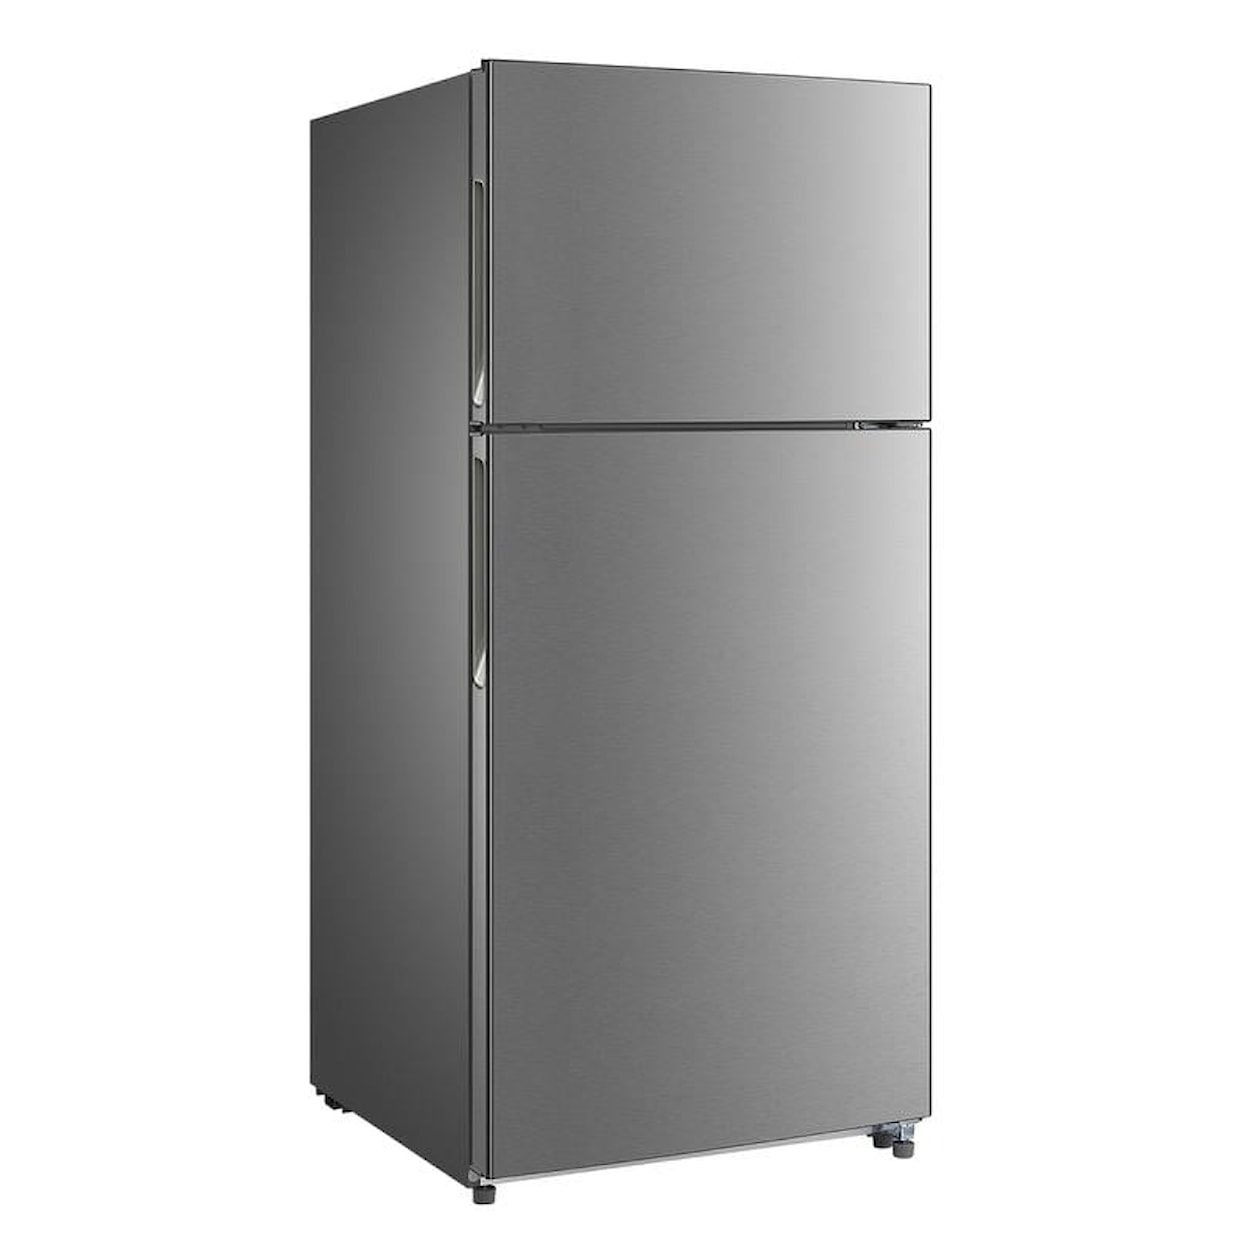 Avanti Refrigerators Bottom Freezer Built In Refrigerator